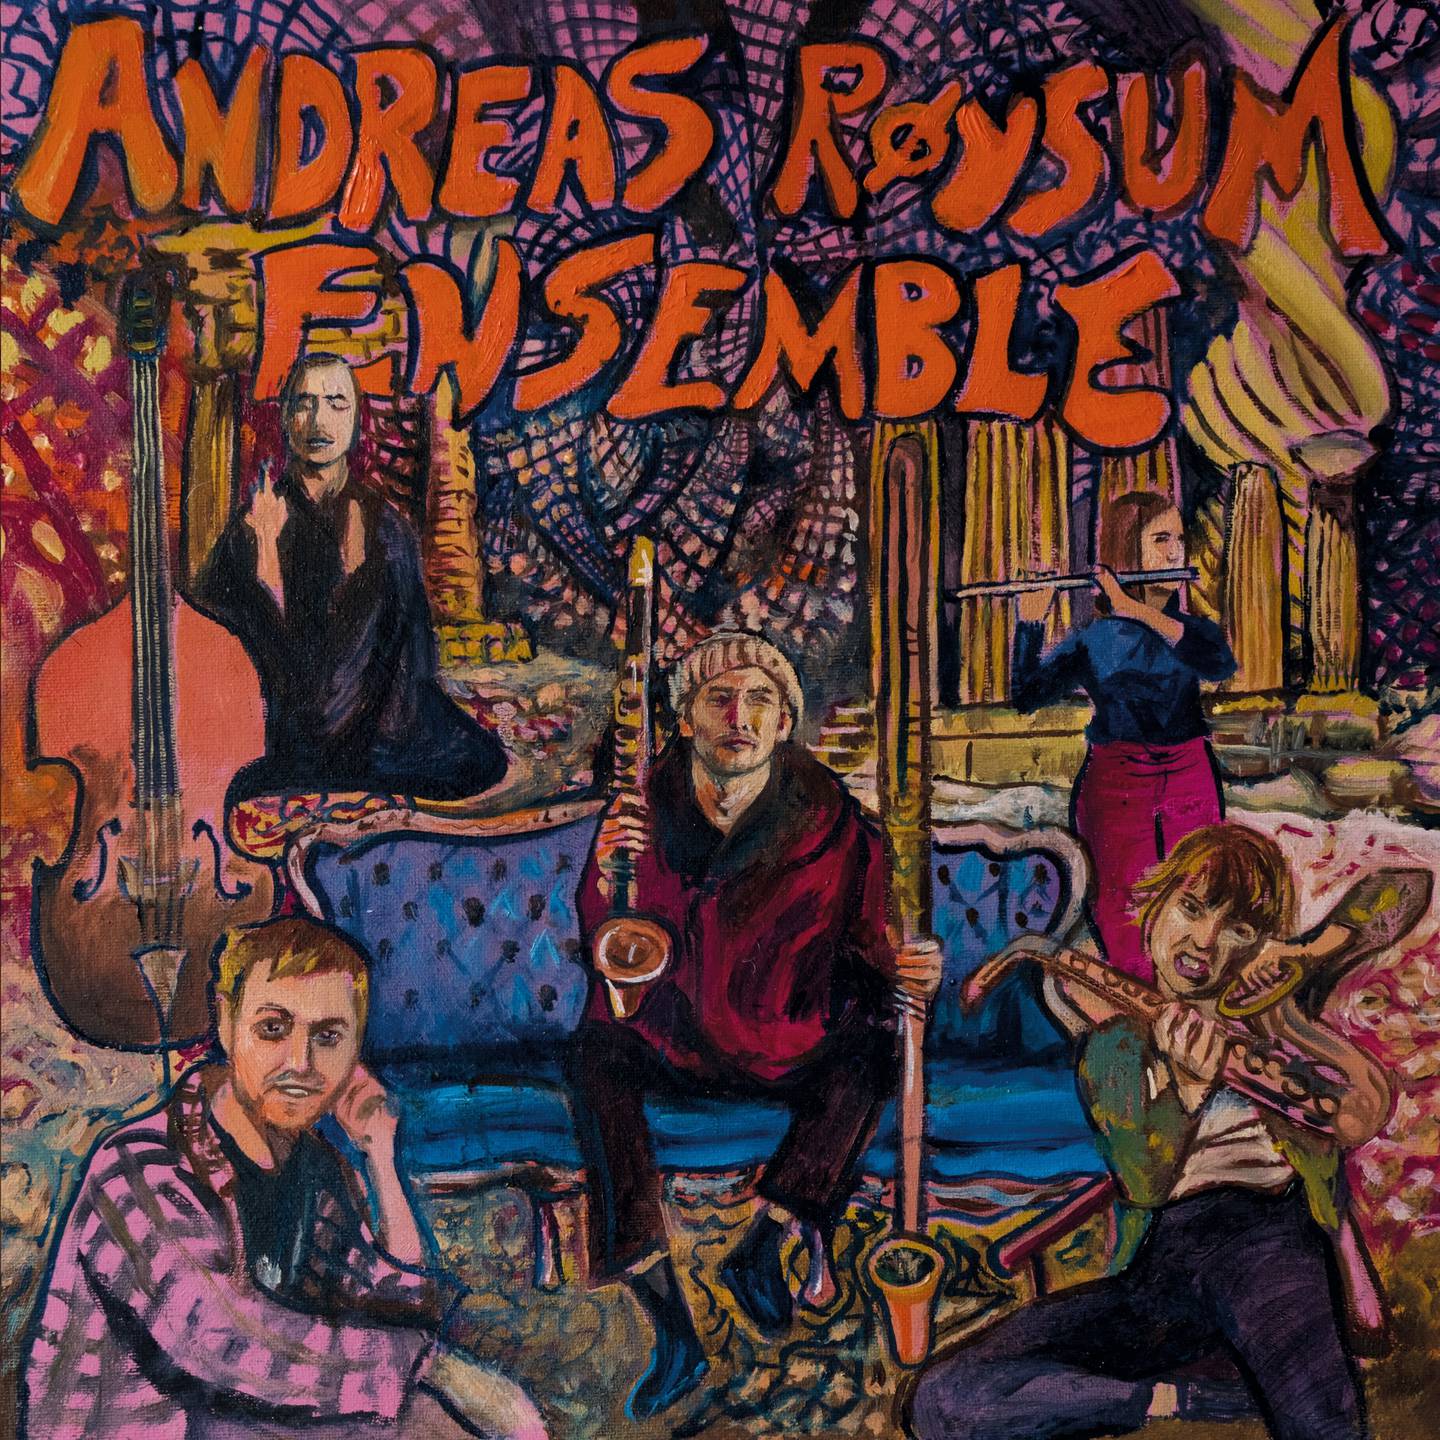 Andreas Røysum Ensemble: 
Fredsfanatisme